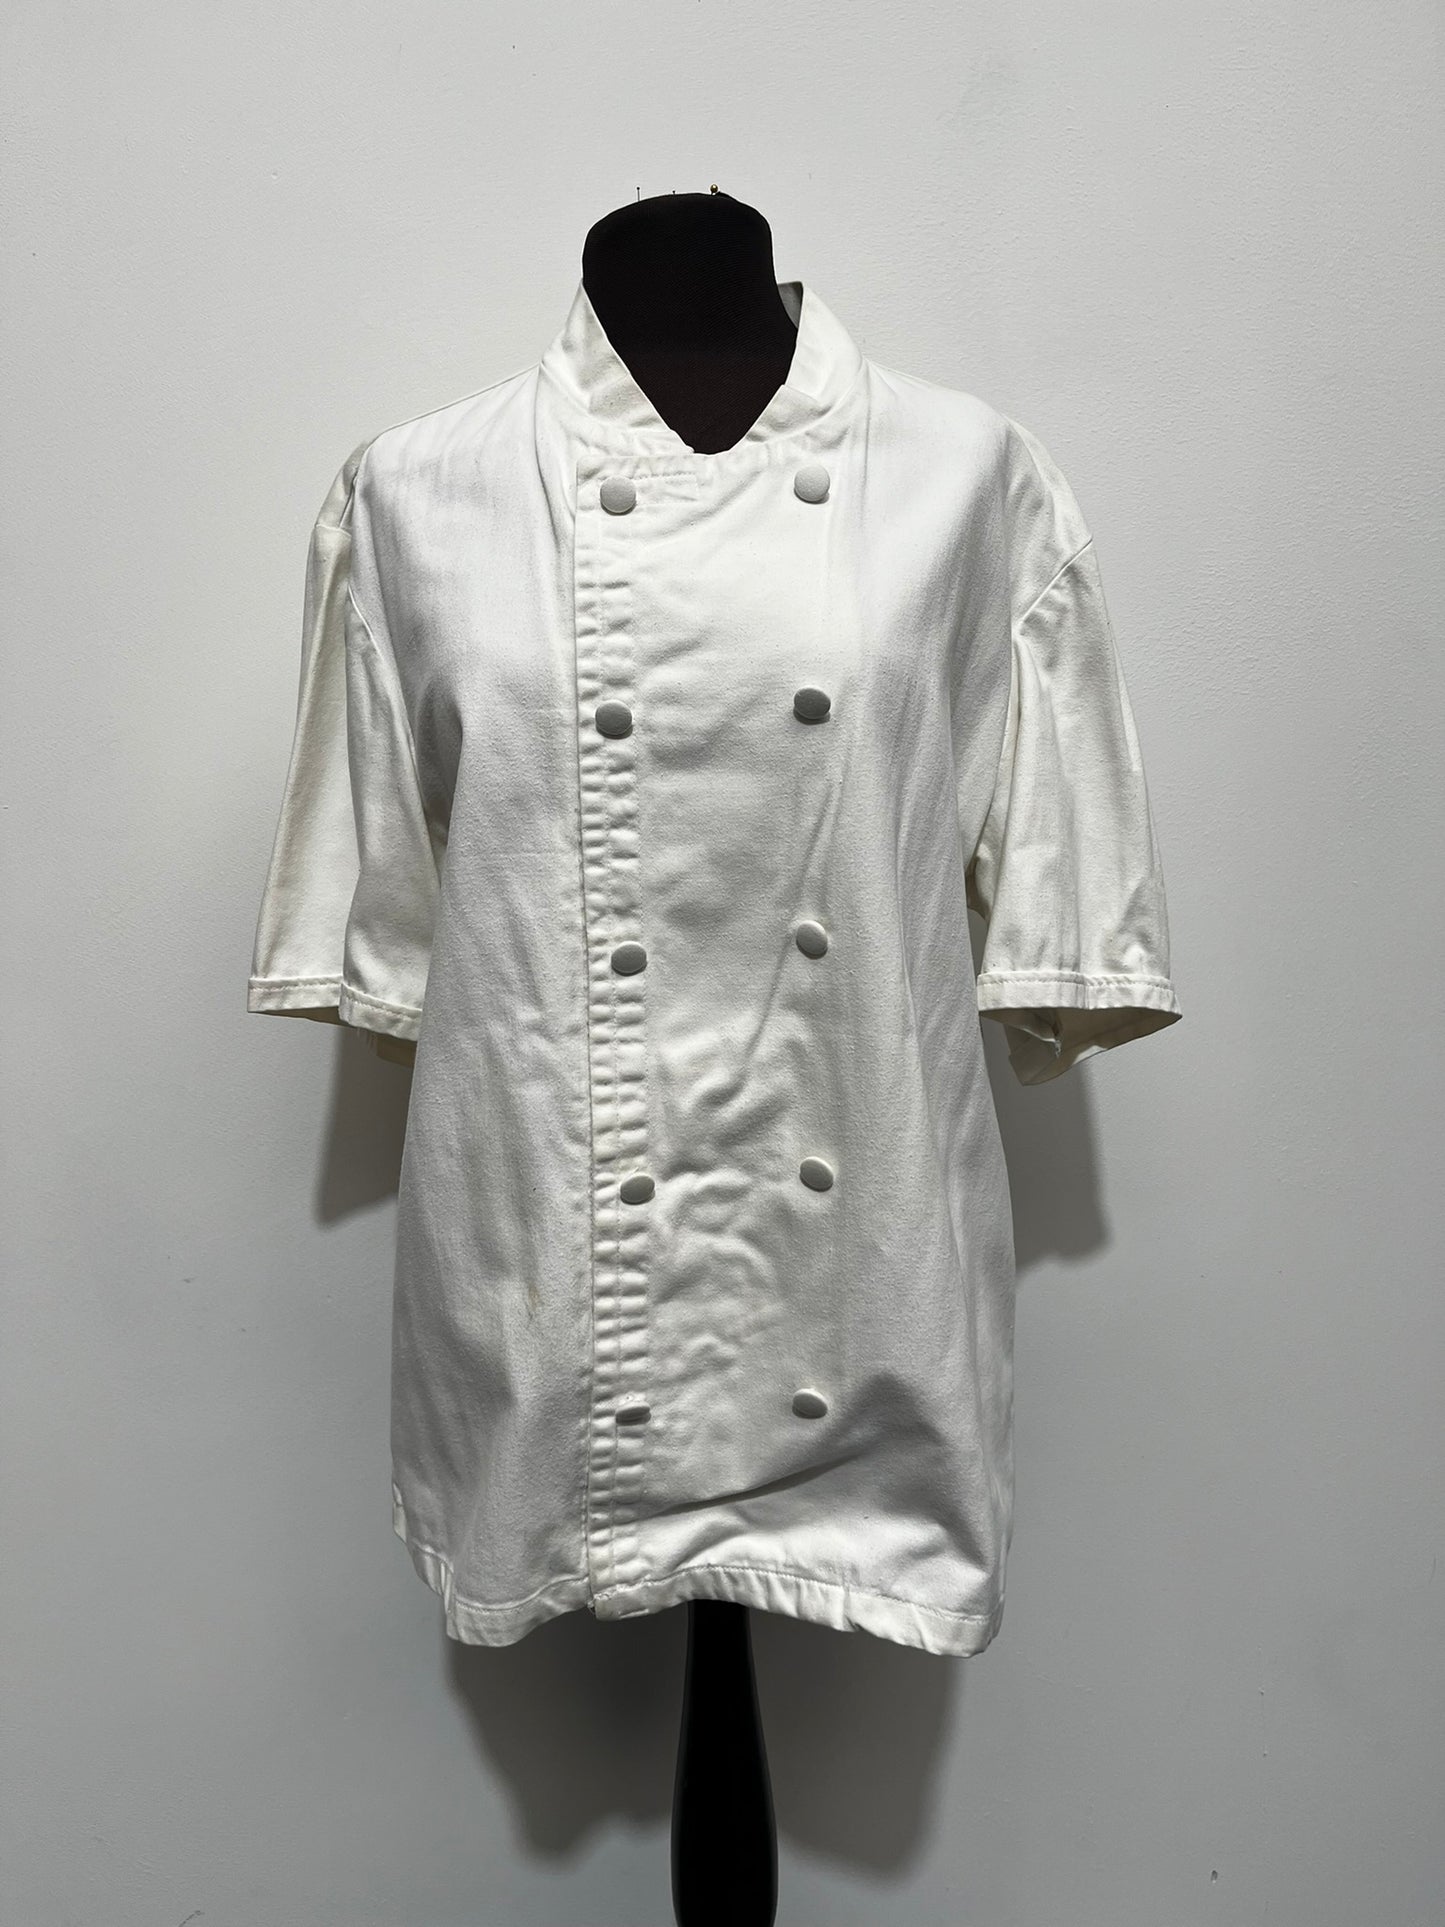 Authentic Chef Whites Uniform in USED Condition Size Medium